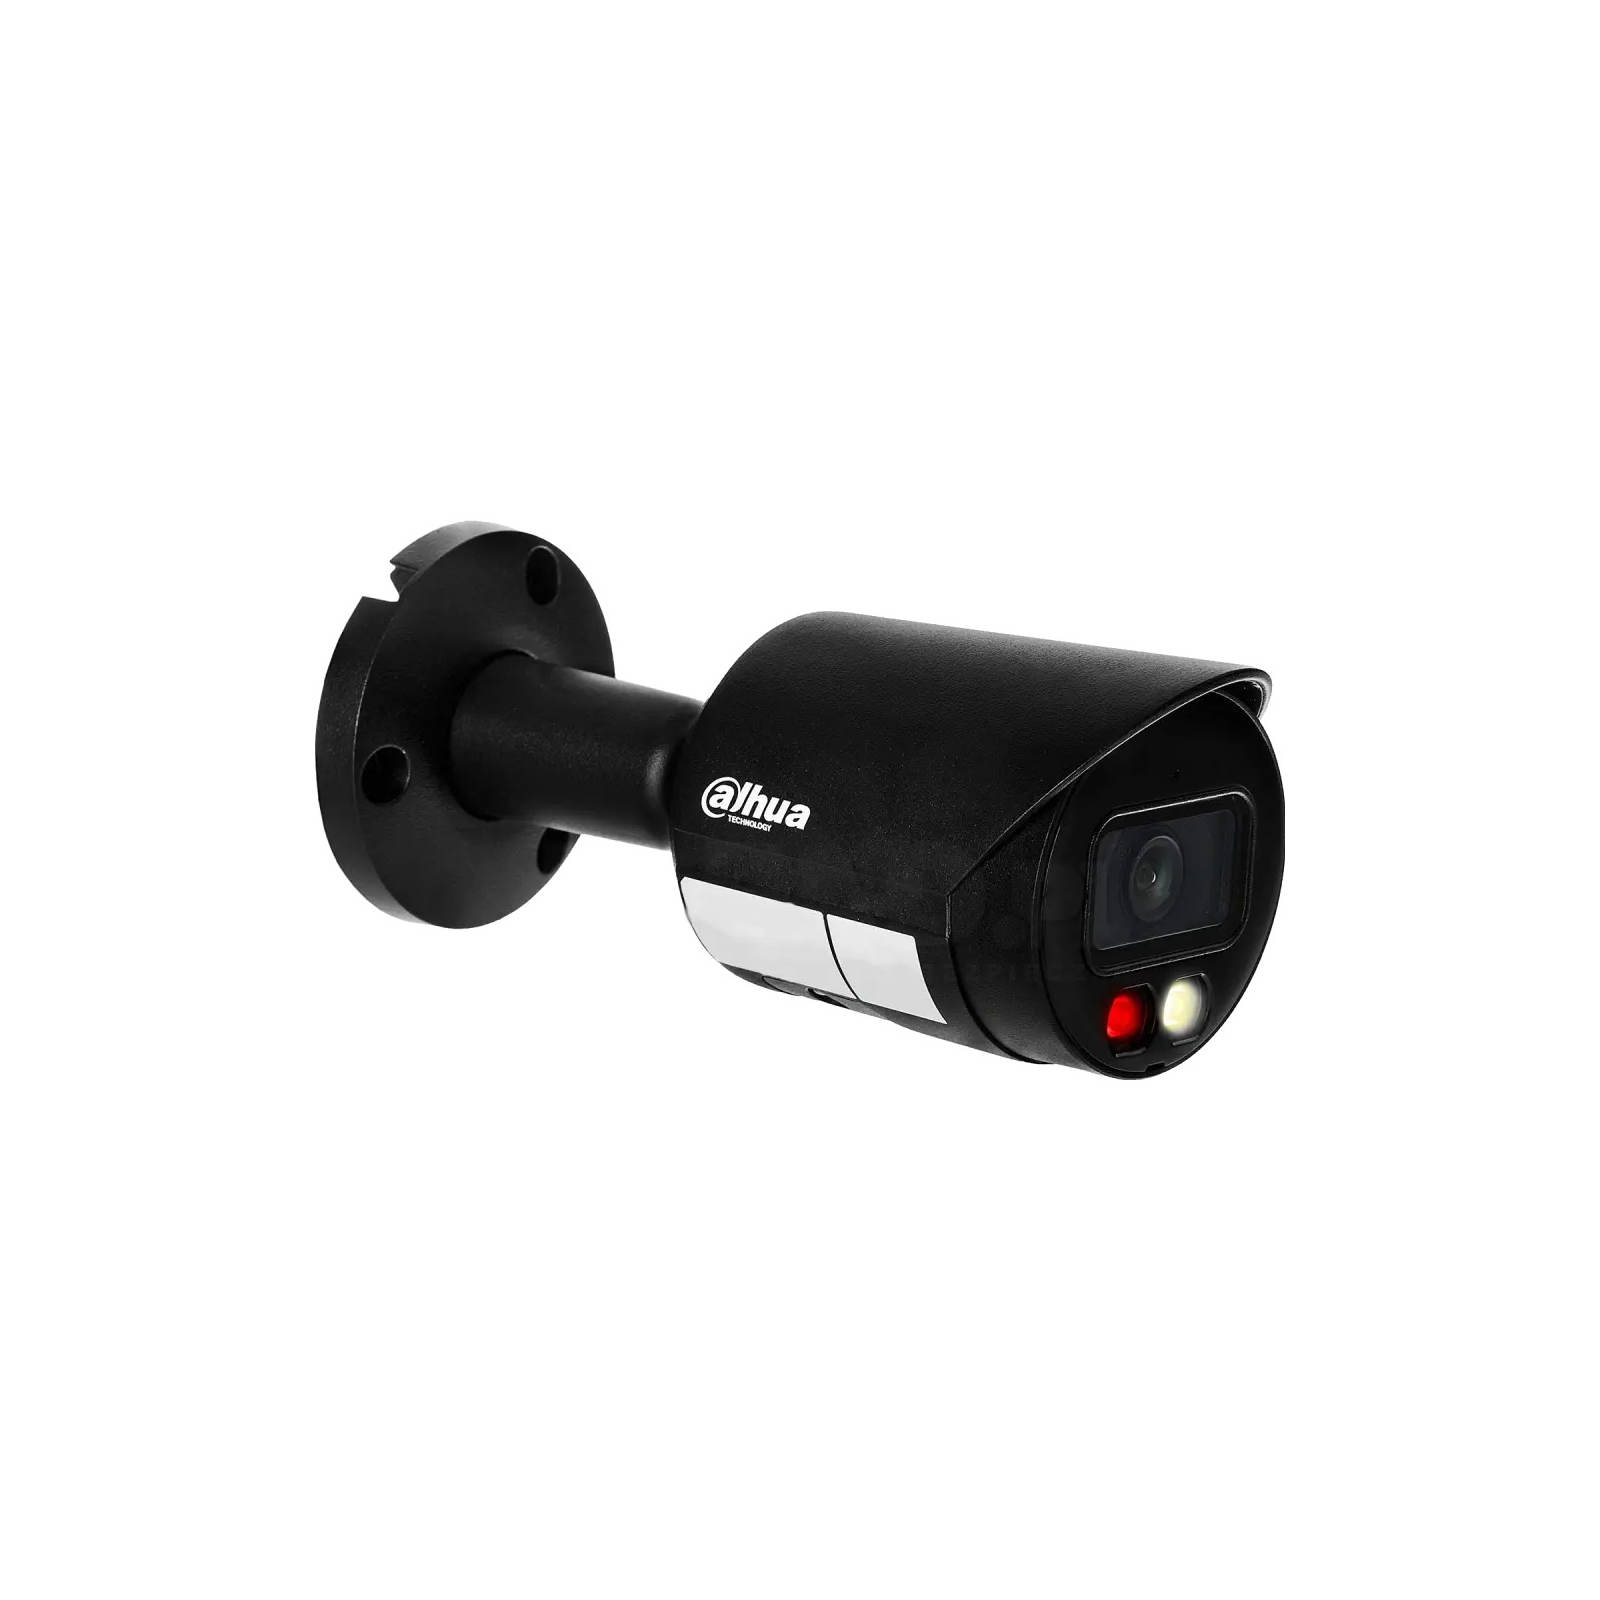 Камера видеонаблюдения Dahua DH-IPC-HFW2449S-S-IL-BE (2.8)